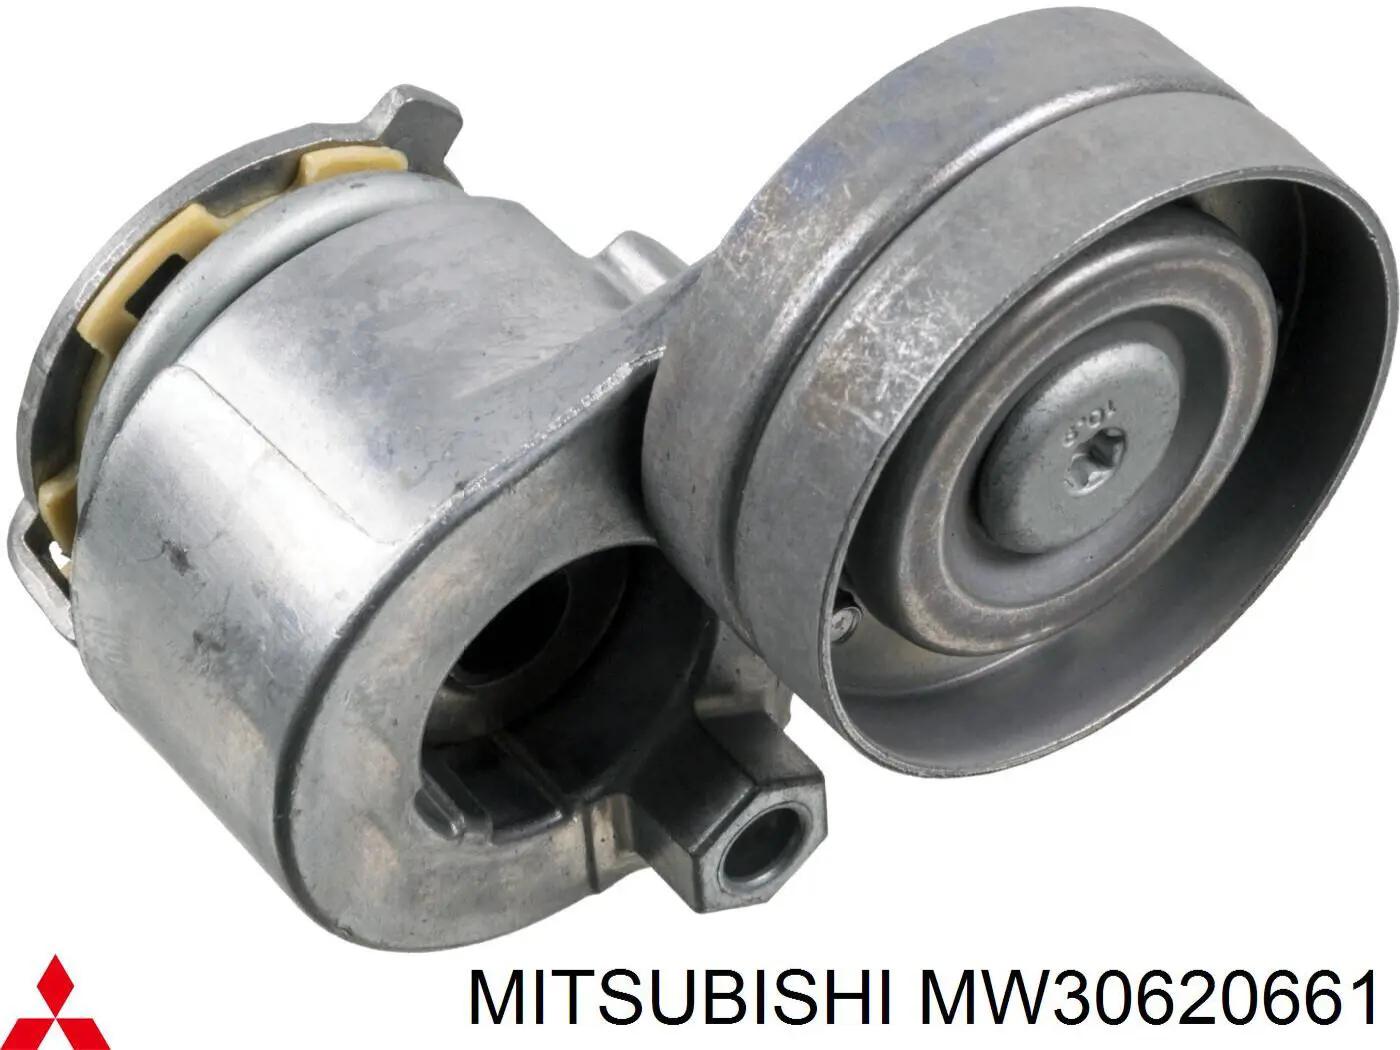 MW30 6206 61 Mitsubishi tensor de correa poli v